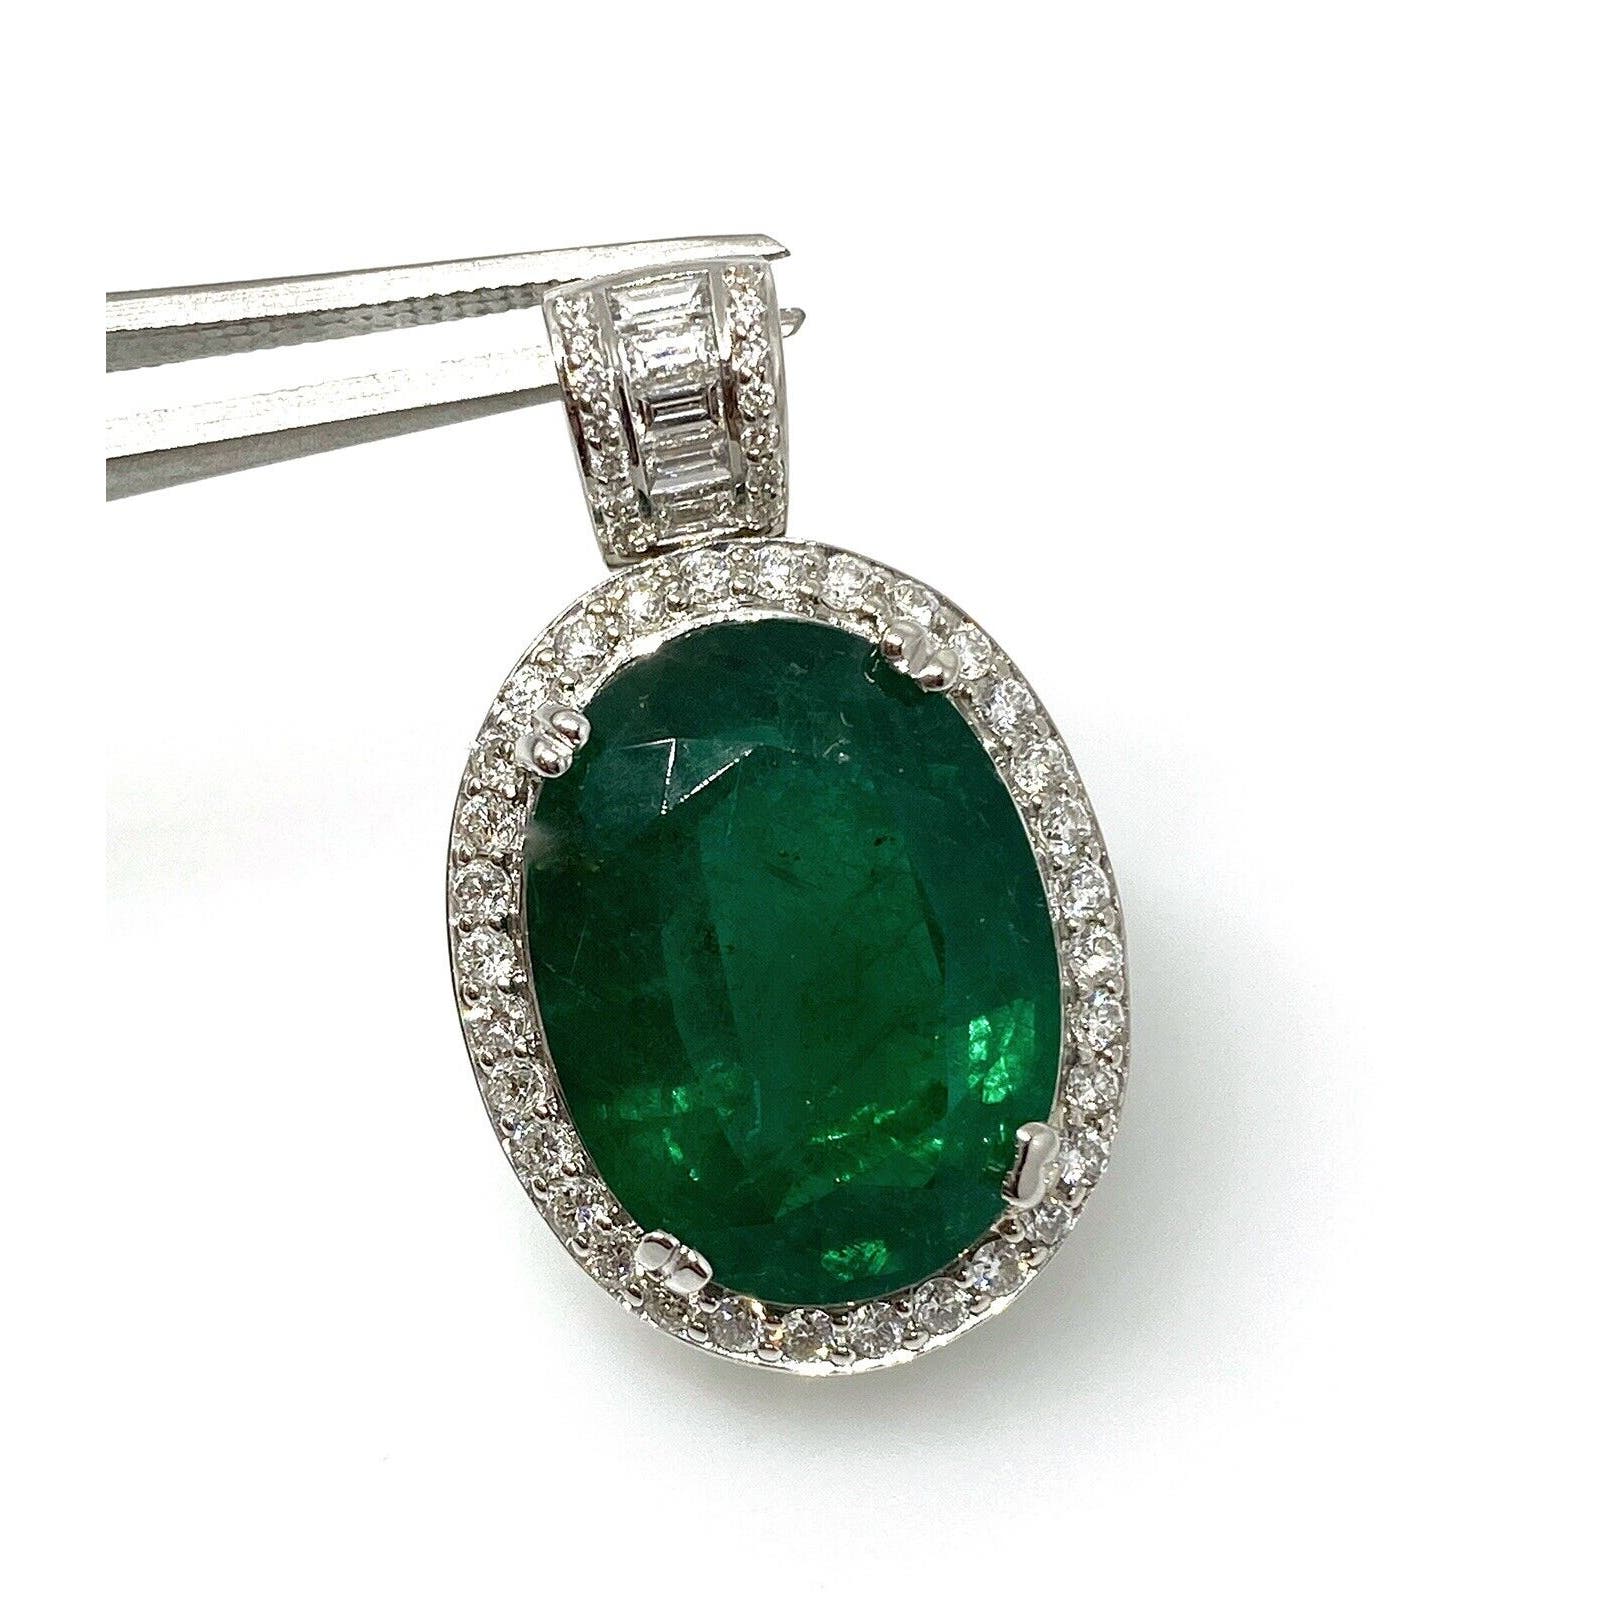 GIA Certified 11.76 ct Oval Emerald & Diamond Pendant in 18k White Gold-HM2316R5